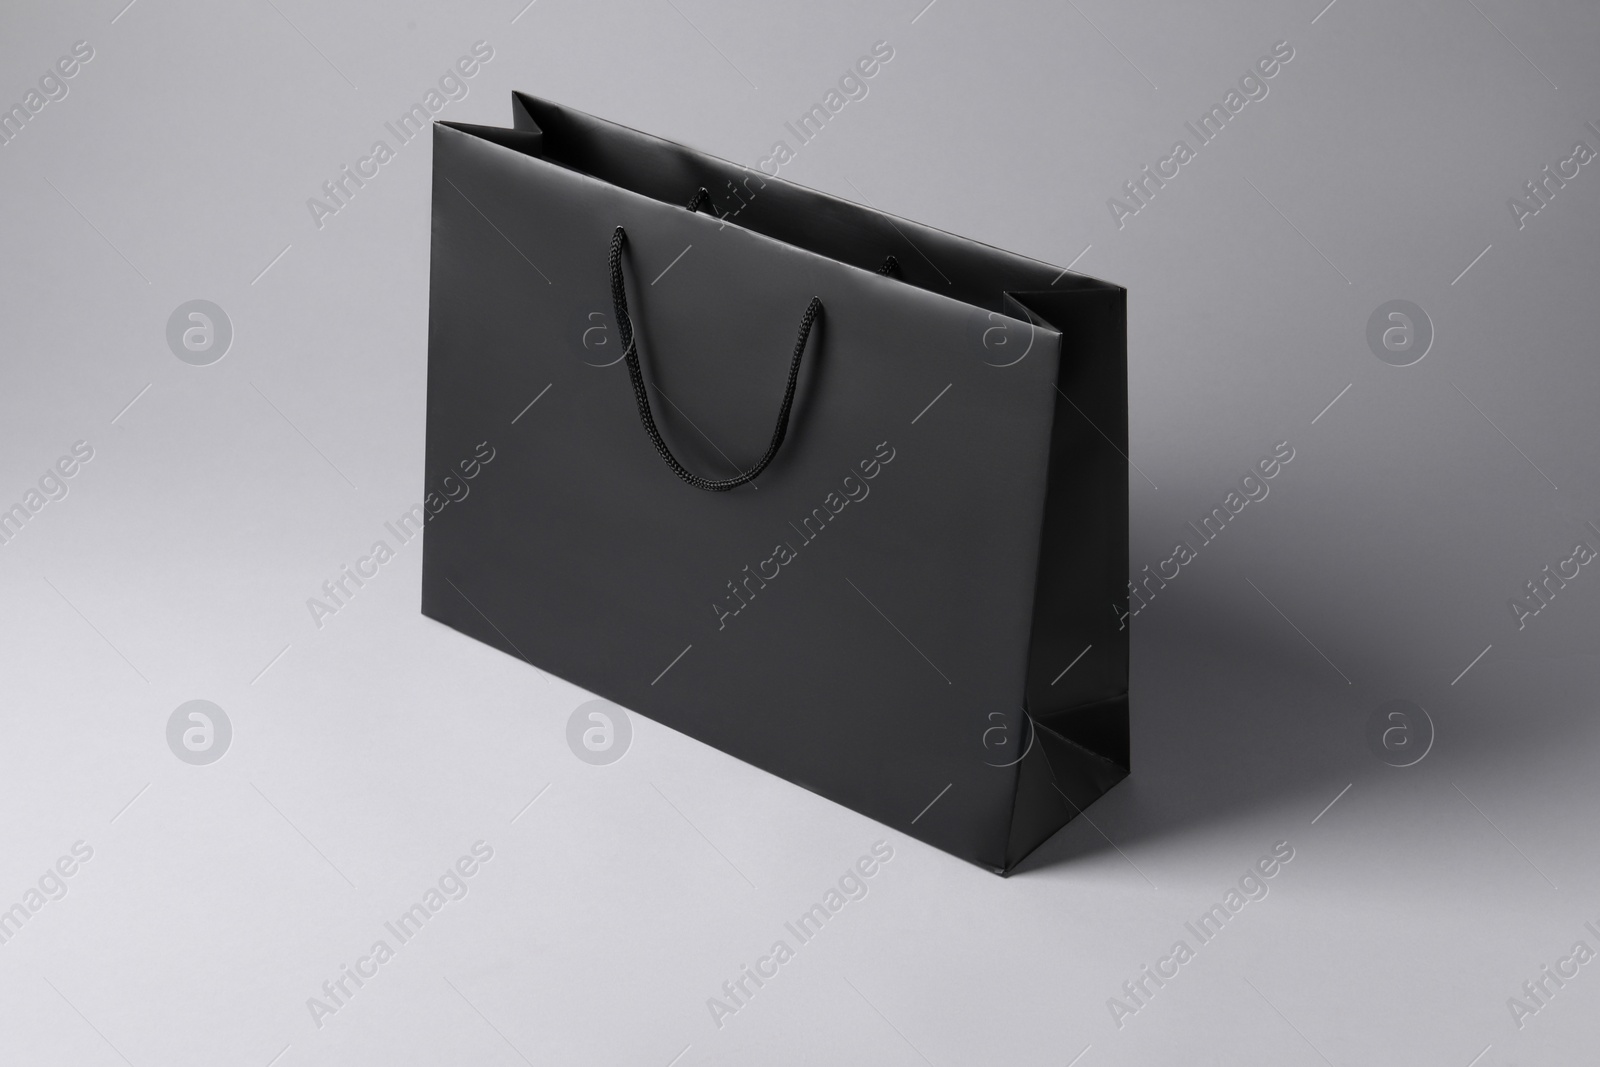 Photo of Black paper bag on light grey background